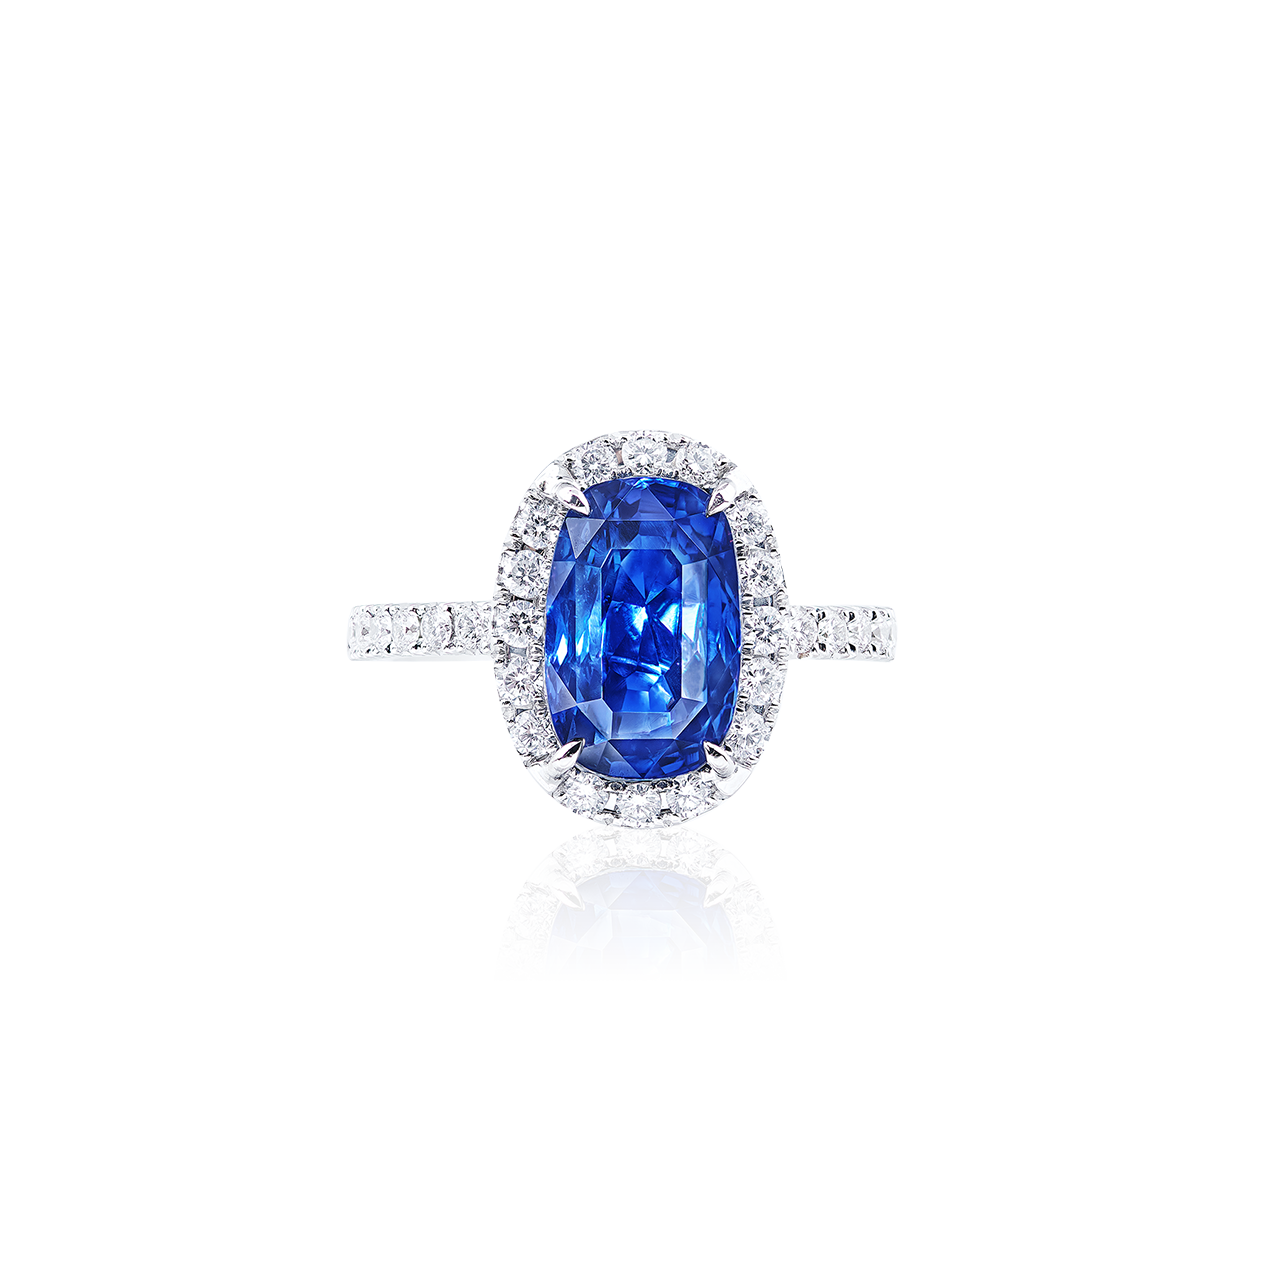 6.61克拉 藍寶鑽戒
Blue Sapphire and Diamond Ring